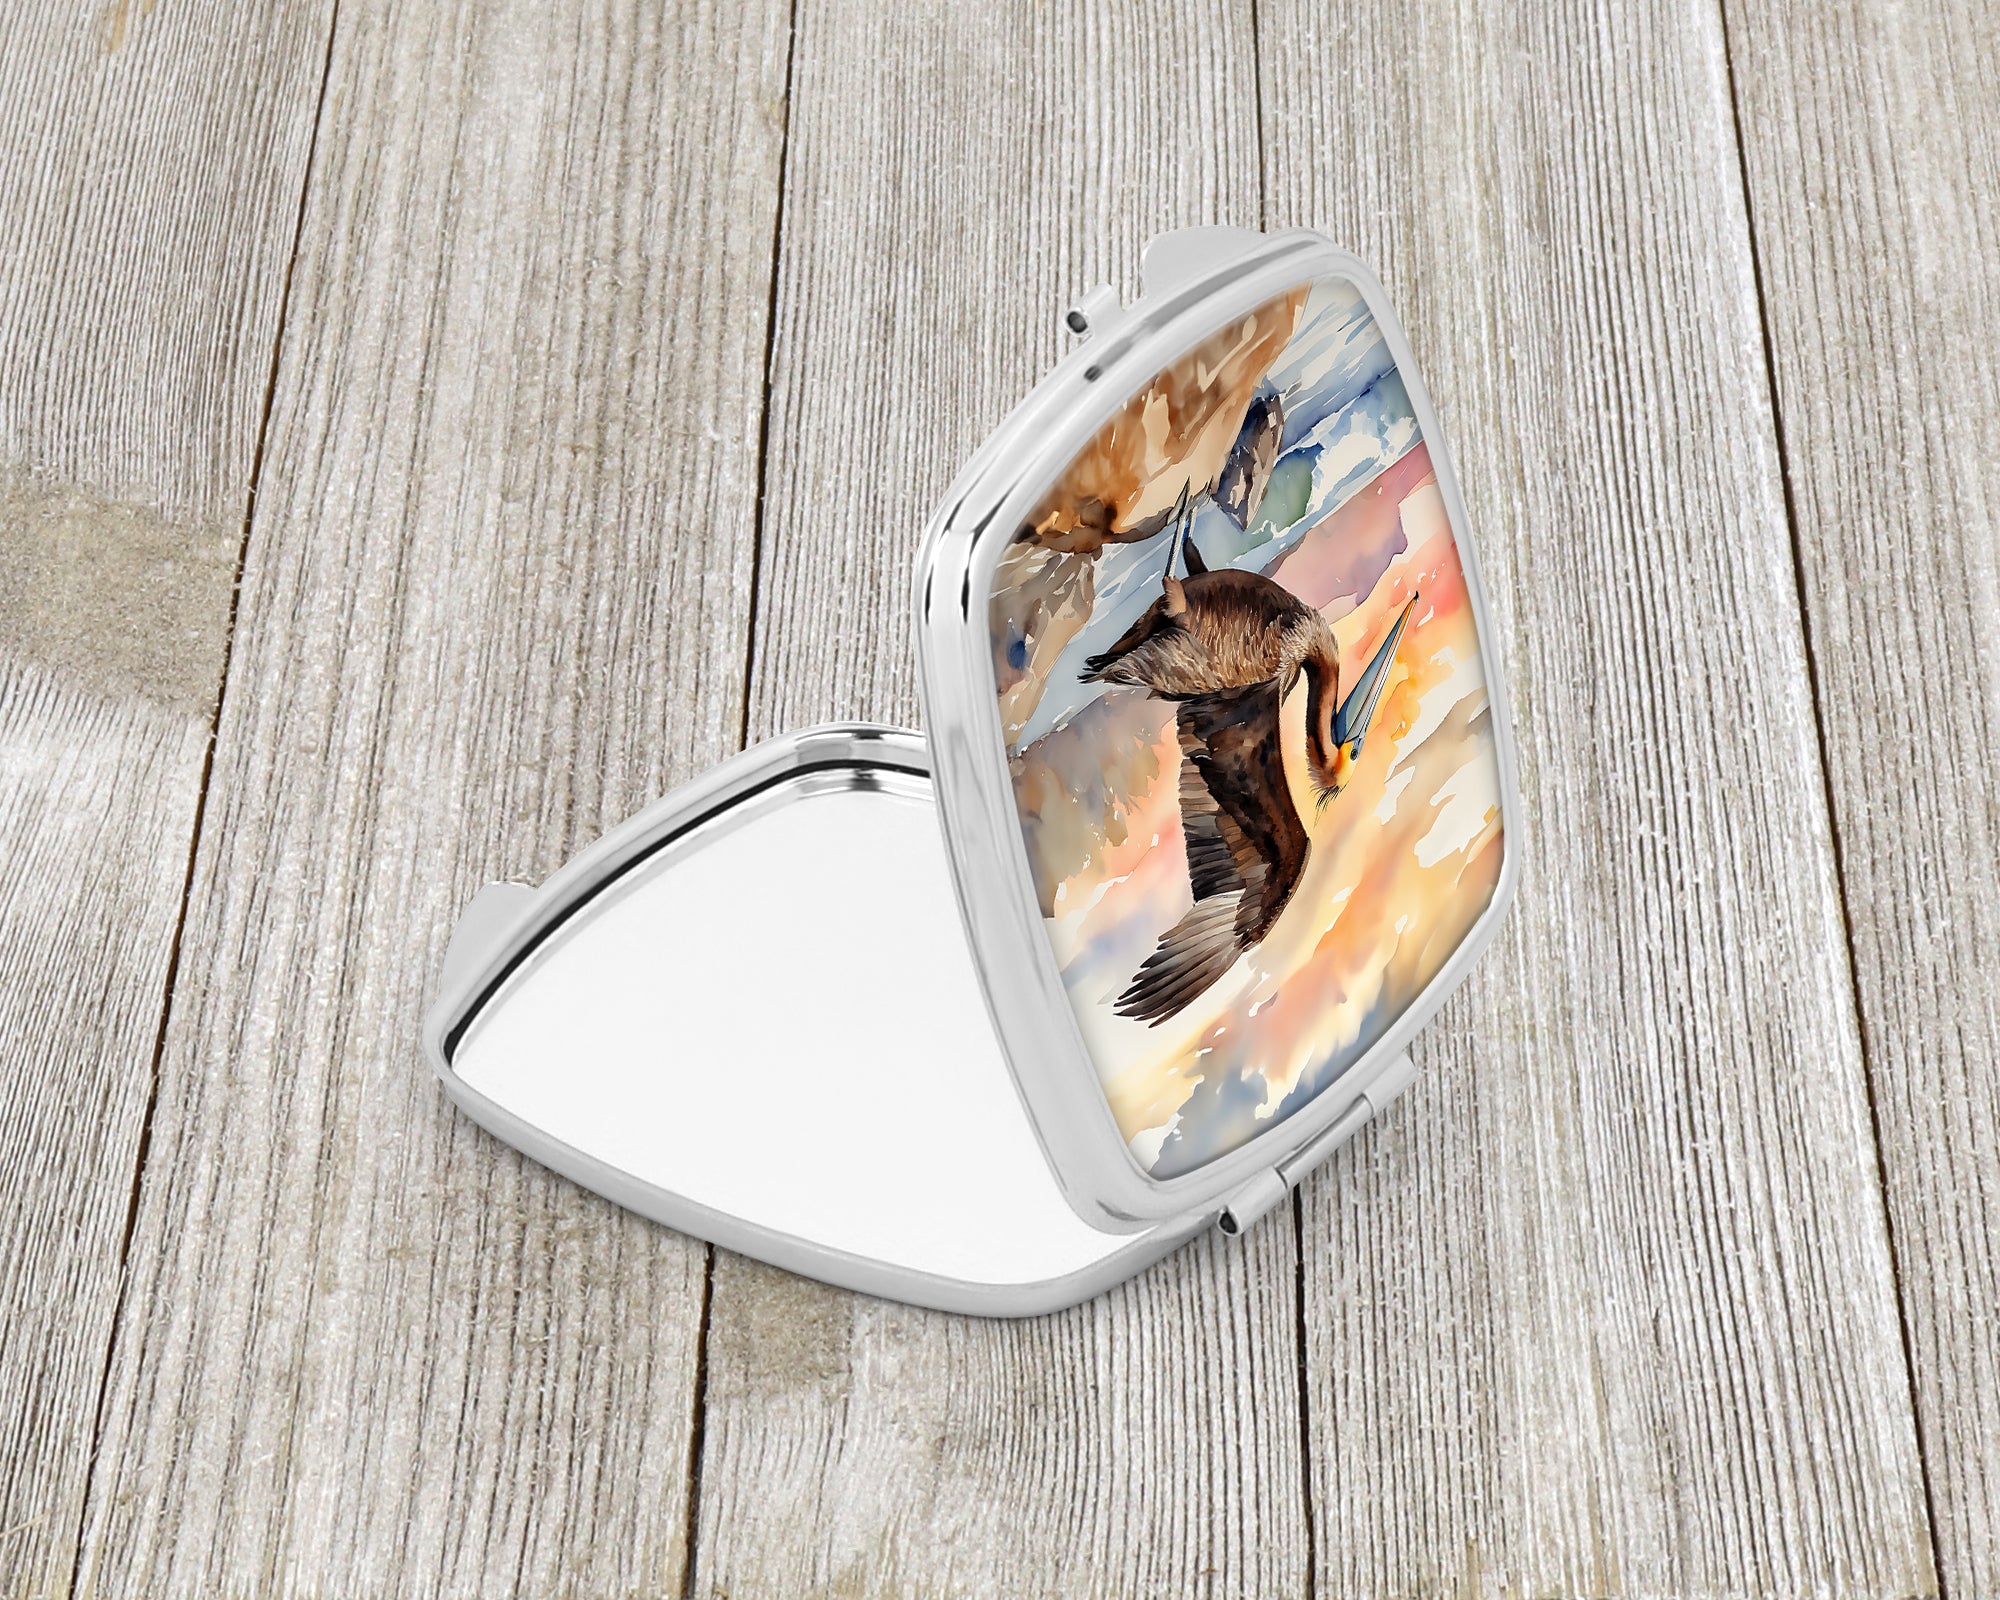 Buy this Pelican Compact Mirror